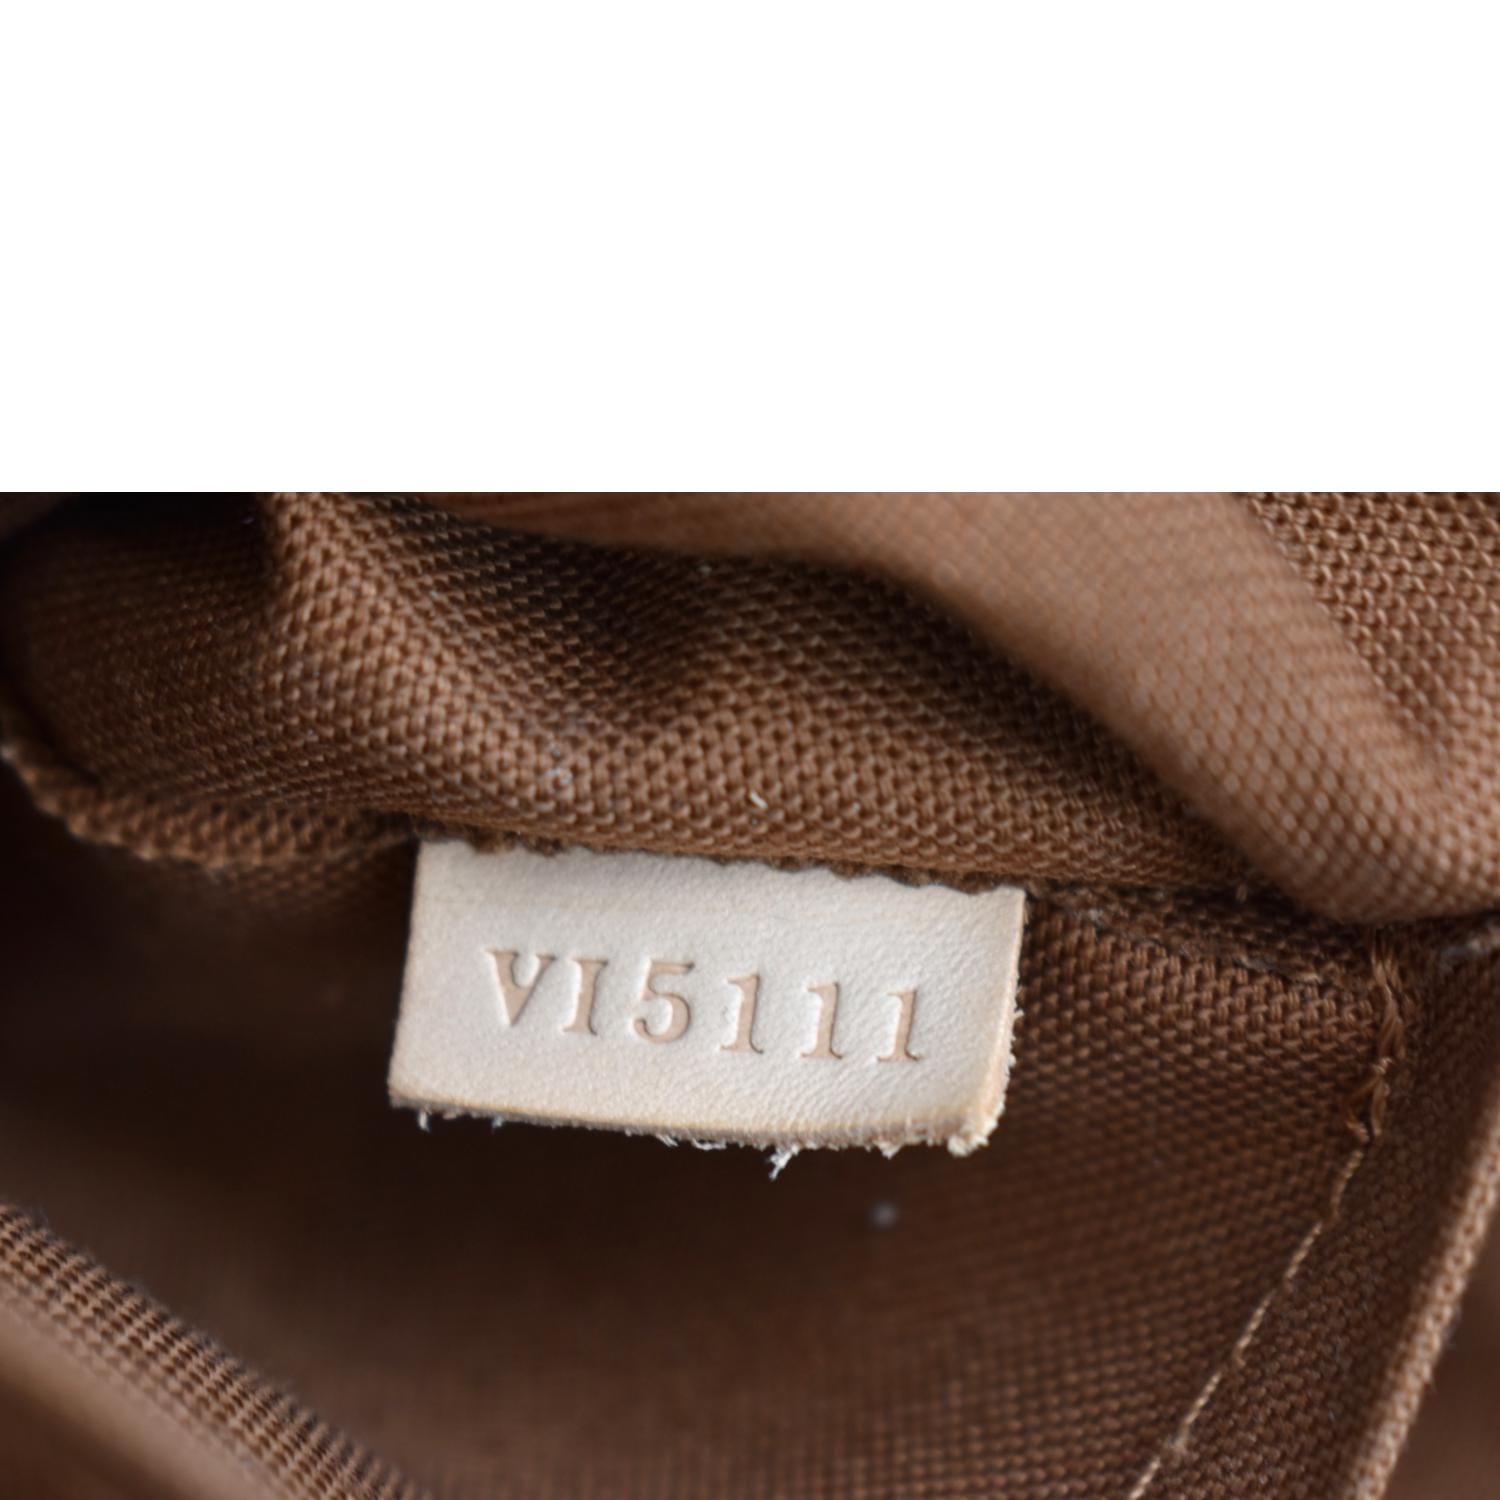 Louis Vuitton Tivoli PM Monogram Canvas Satchel Bag Brown